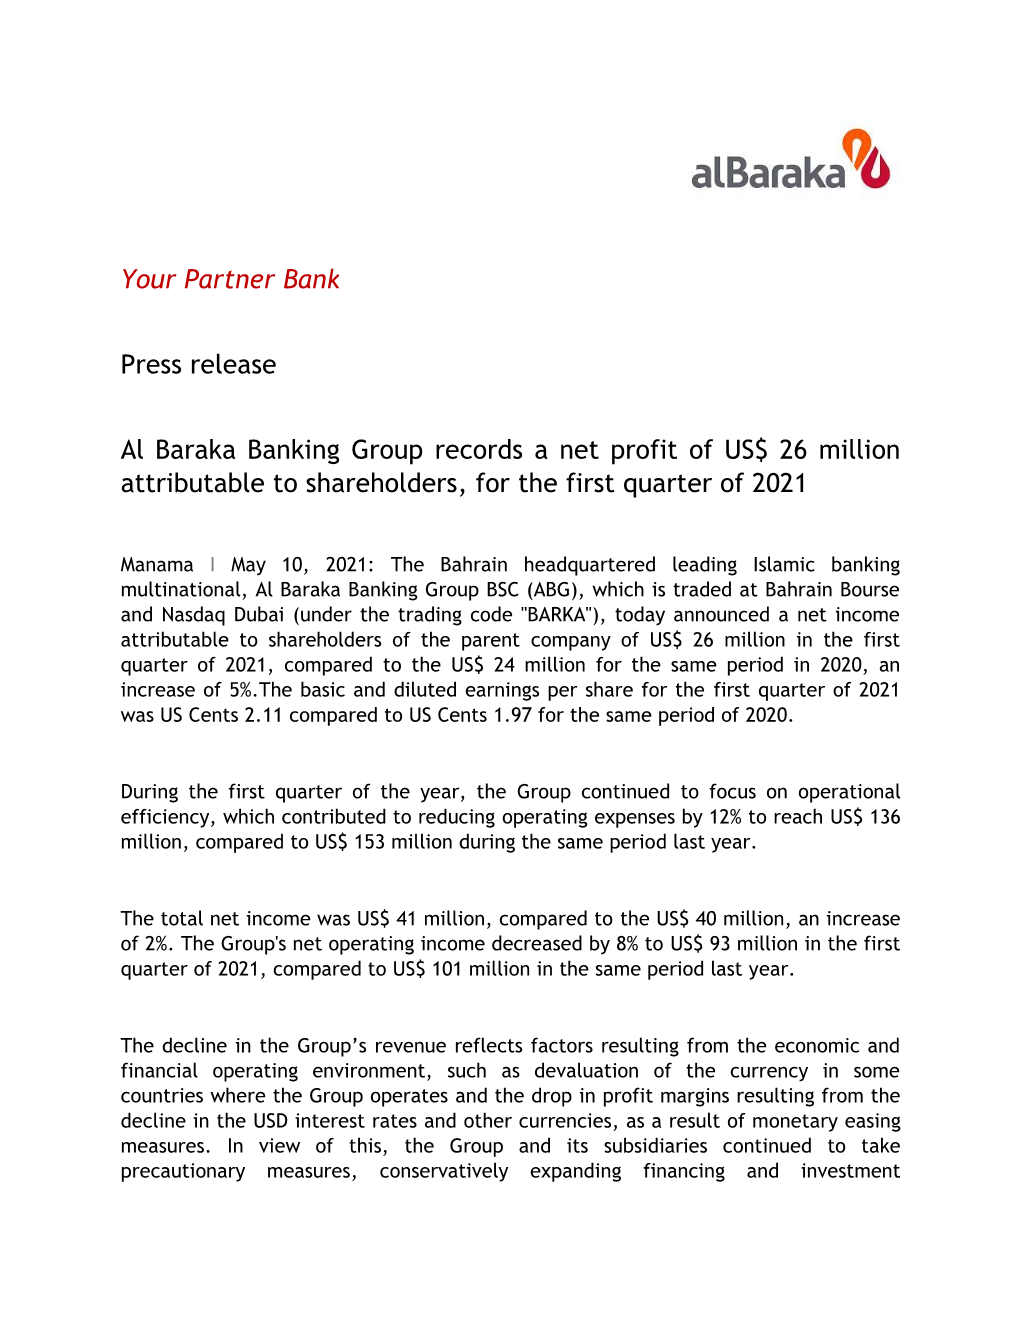 Your Partner Bank Press Release Al Baraka Banking Group Records A